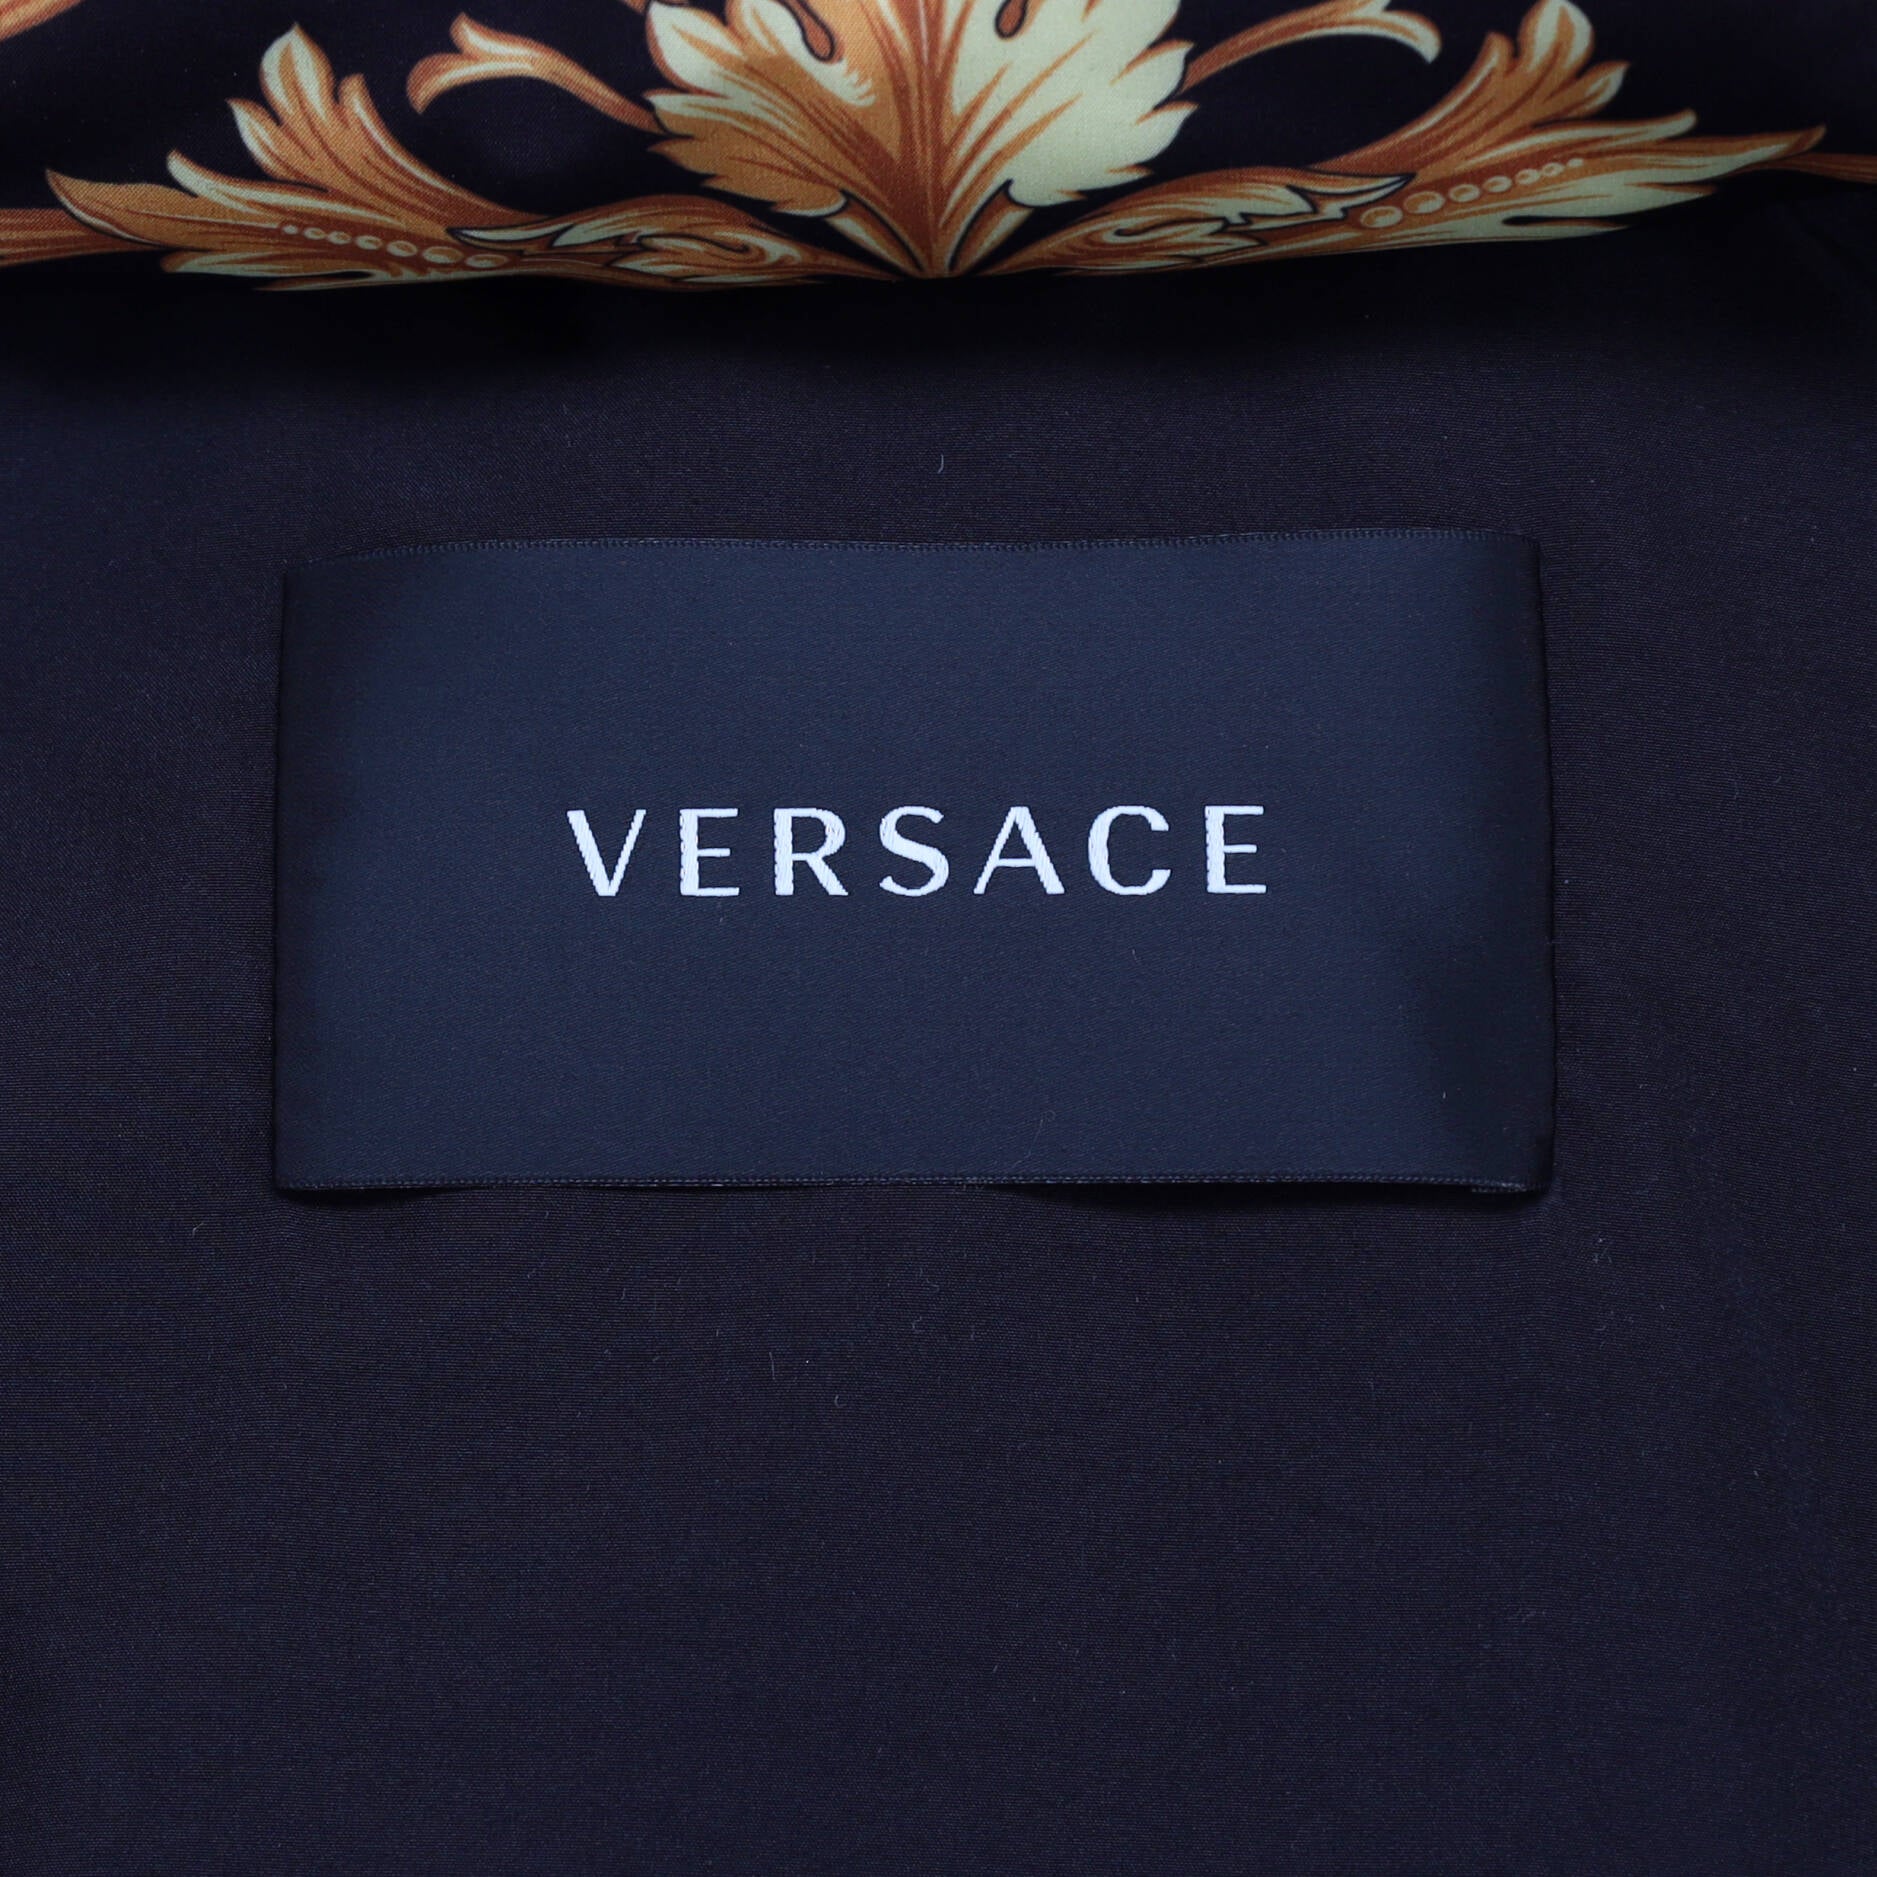 Louis Vuitton Women's Hooded Zip Jacket Monogram Tie Dye Polyester Blend